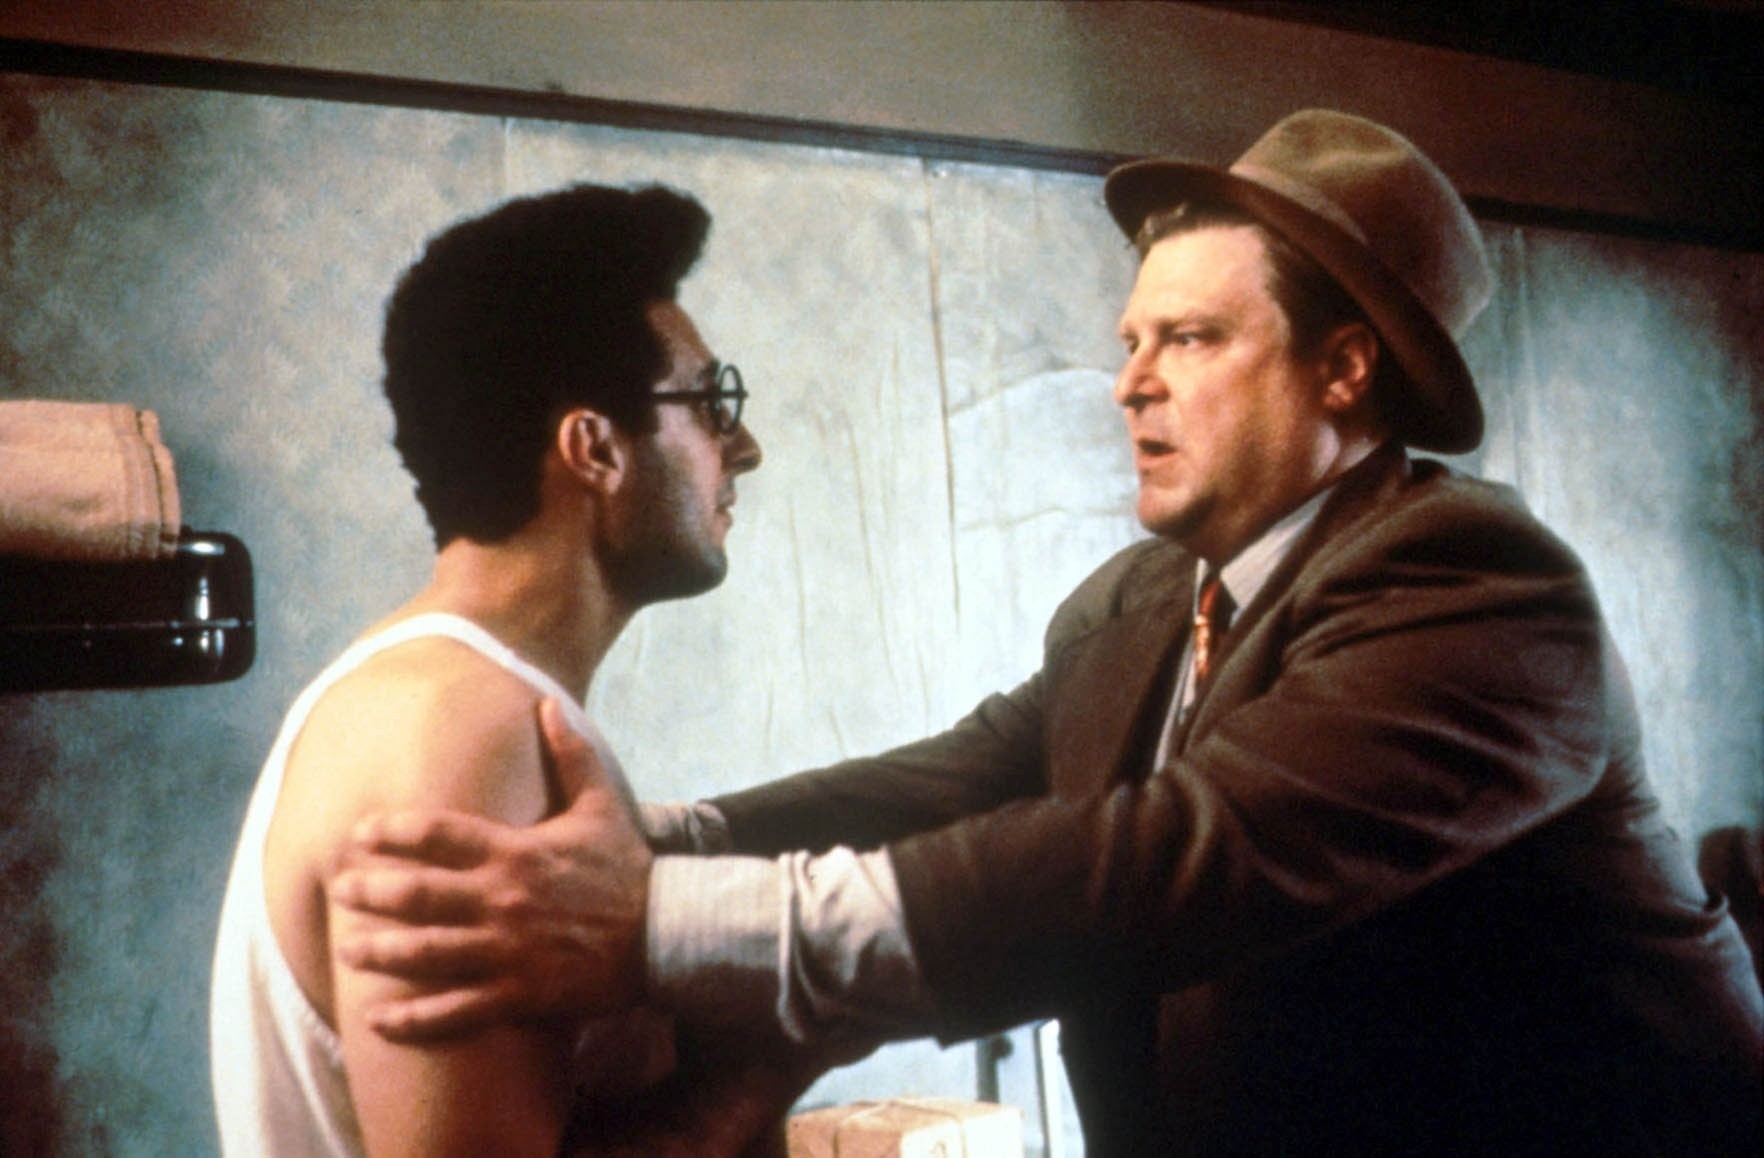 Image du film Barton Fink f1430761-7bb1-41b3-93b6-d793cc5c3bed